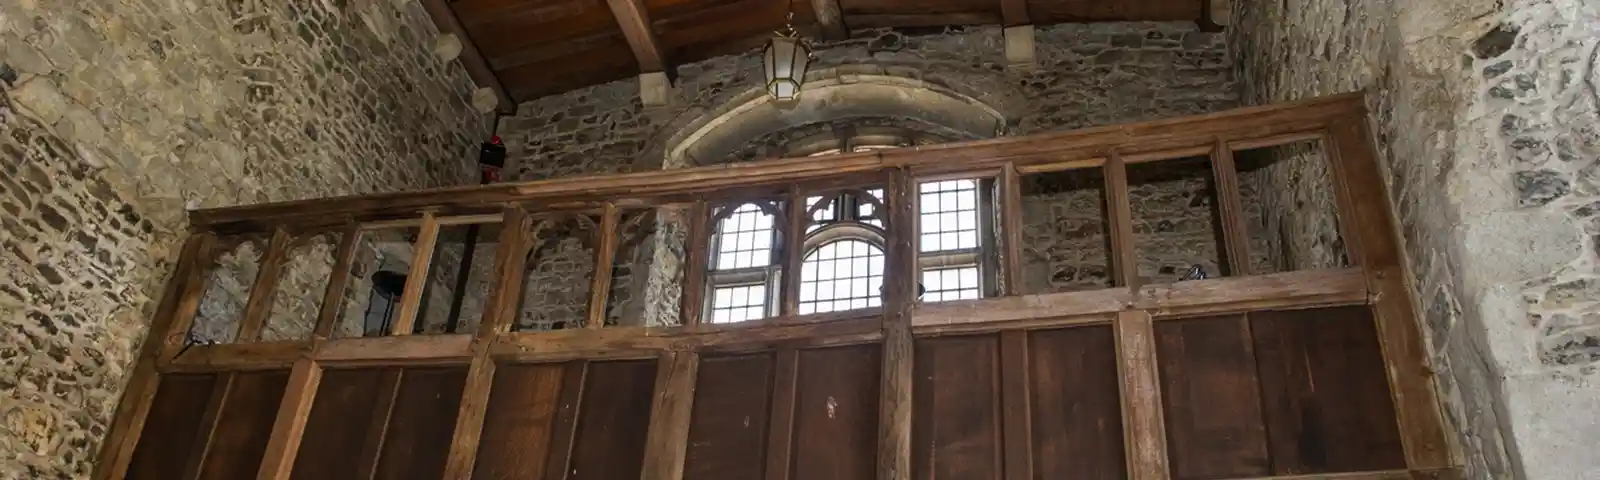 Gallery inside the medieval chapel.JPG